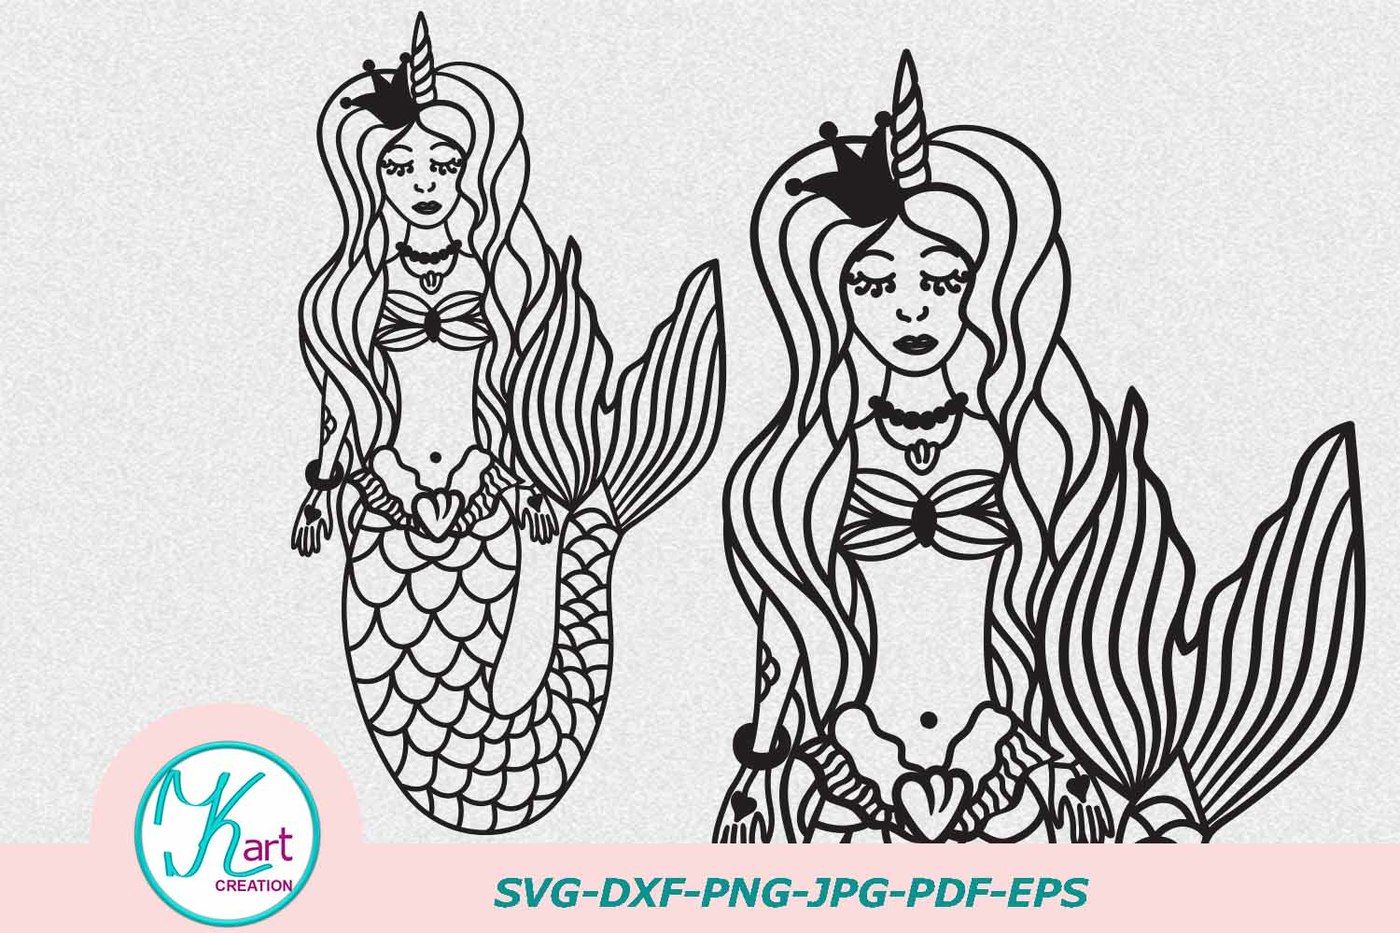 Download Unicorn Mermaid Princess Svg File Papercutting Template By Kartcreation Thehungryjpeg Com